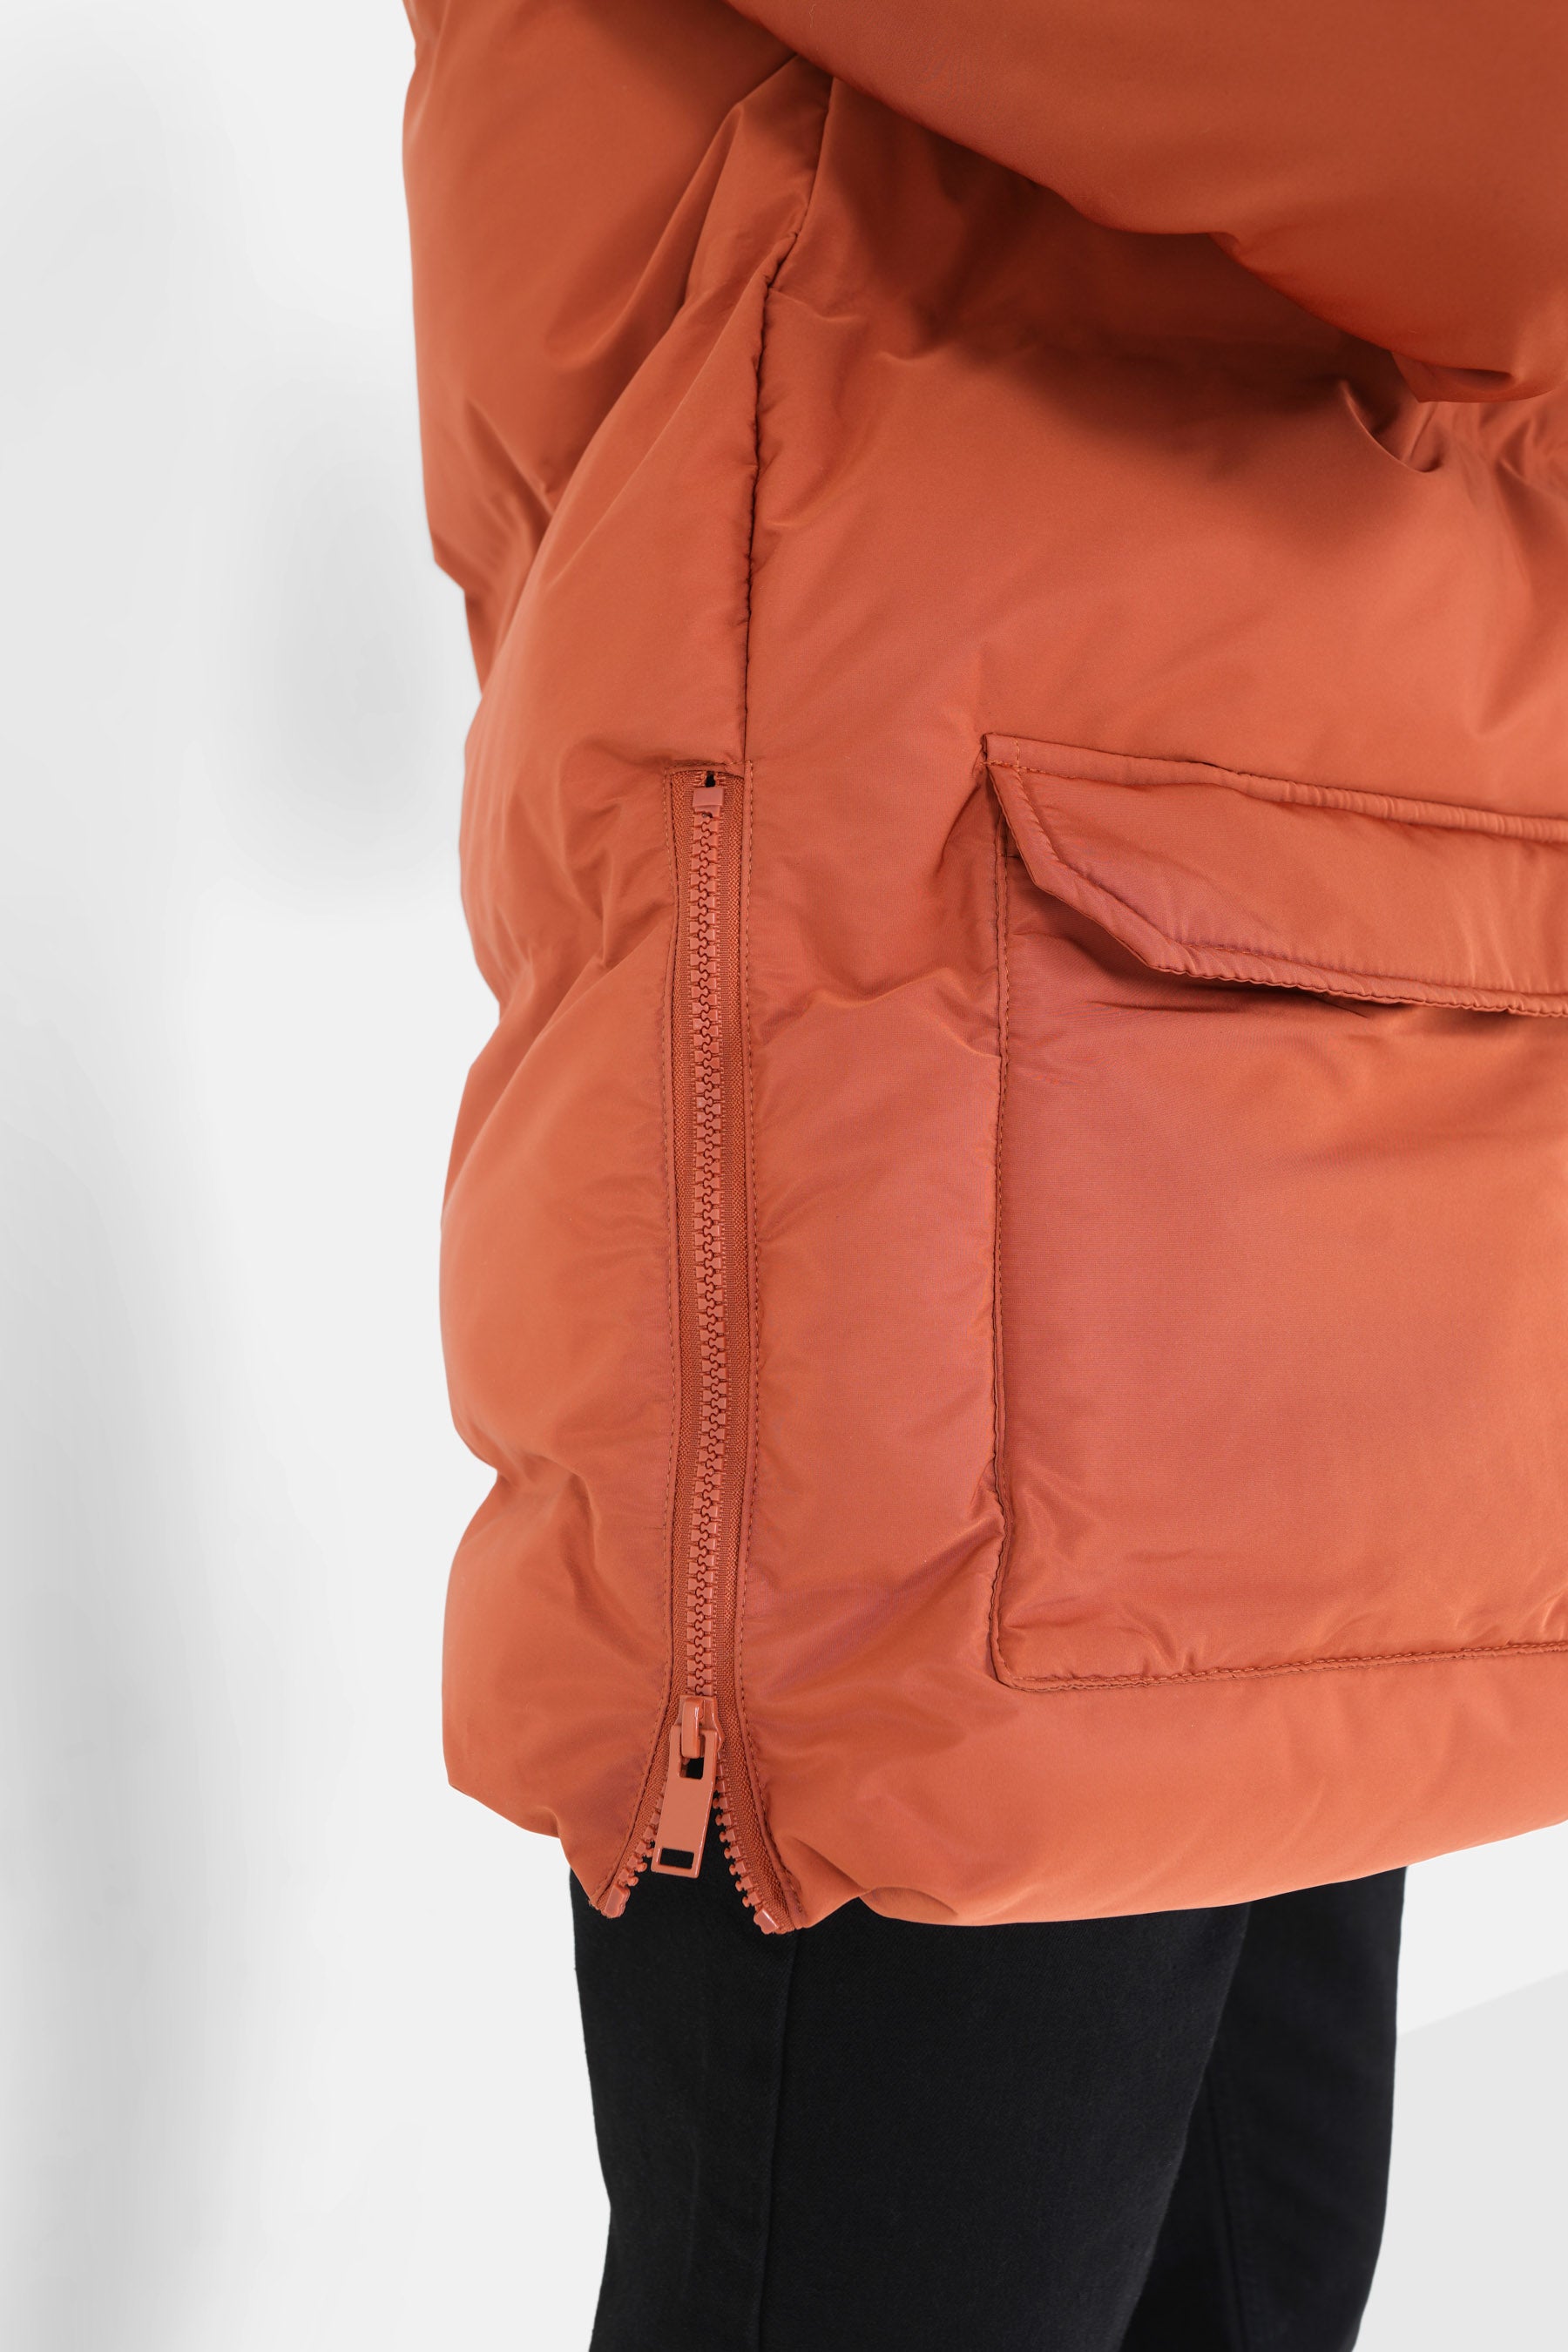 Details down jacket Orange